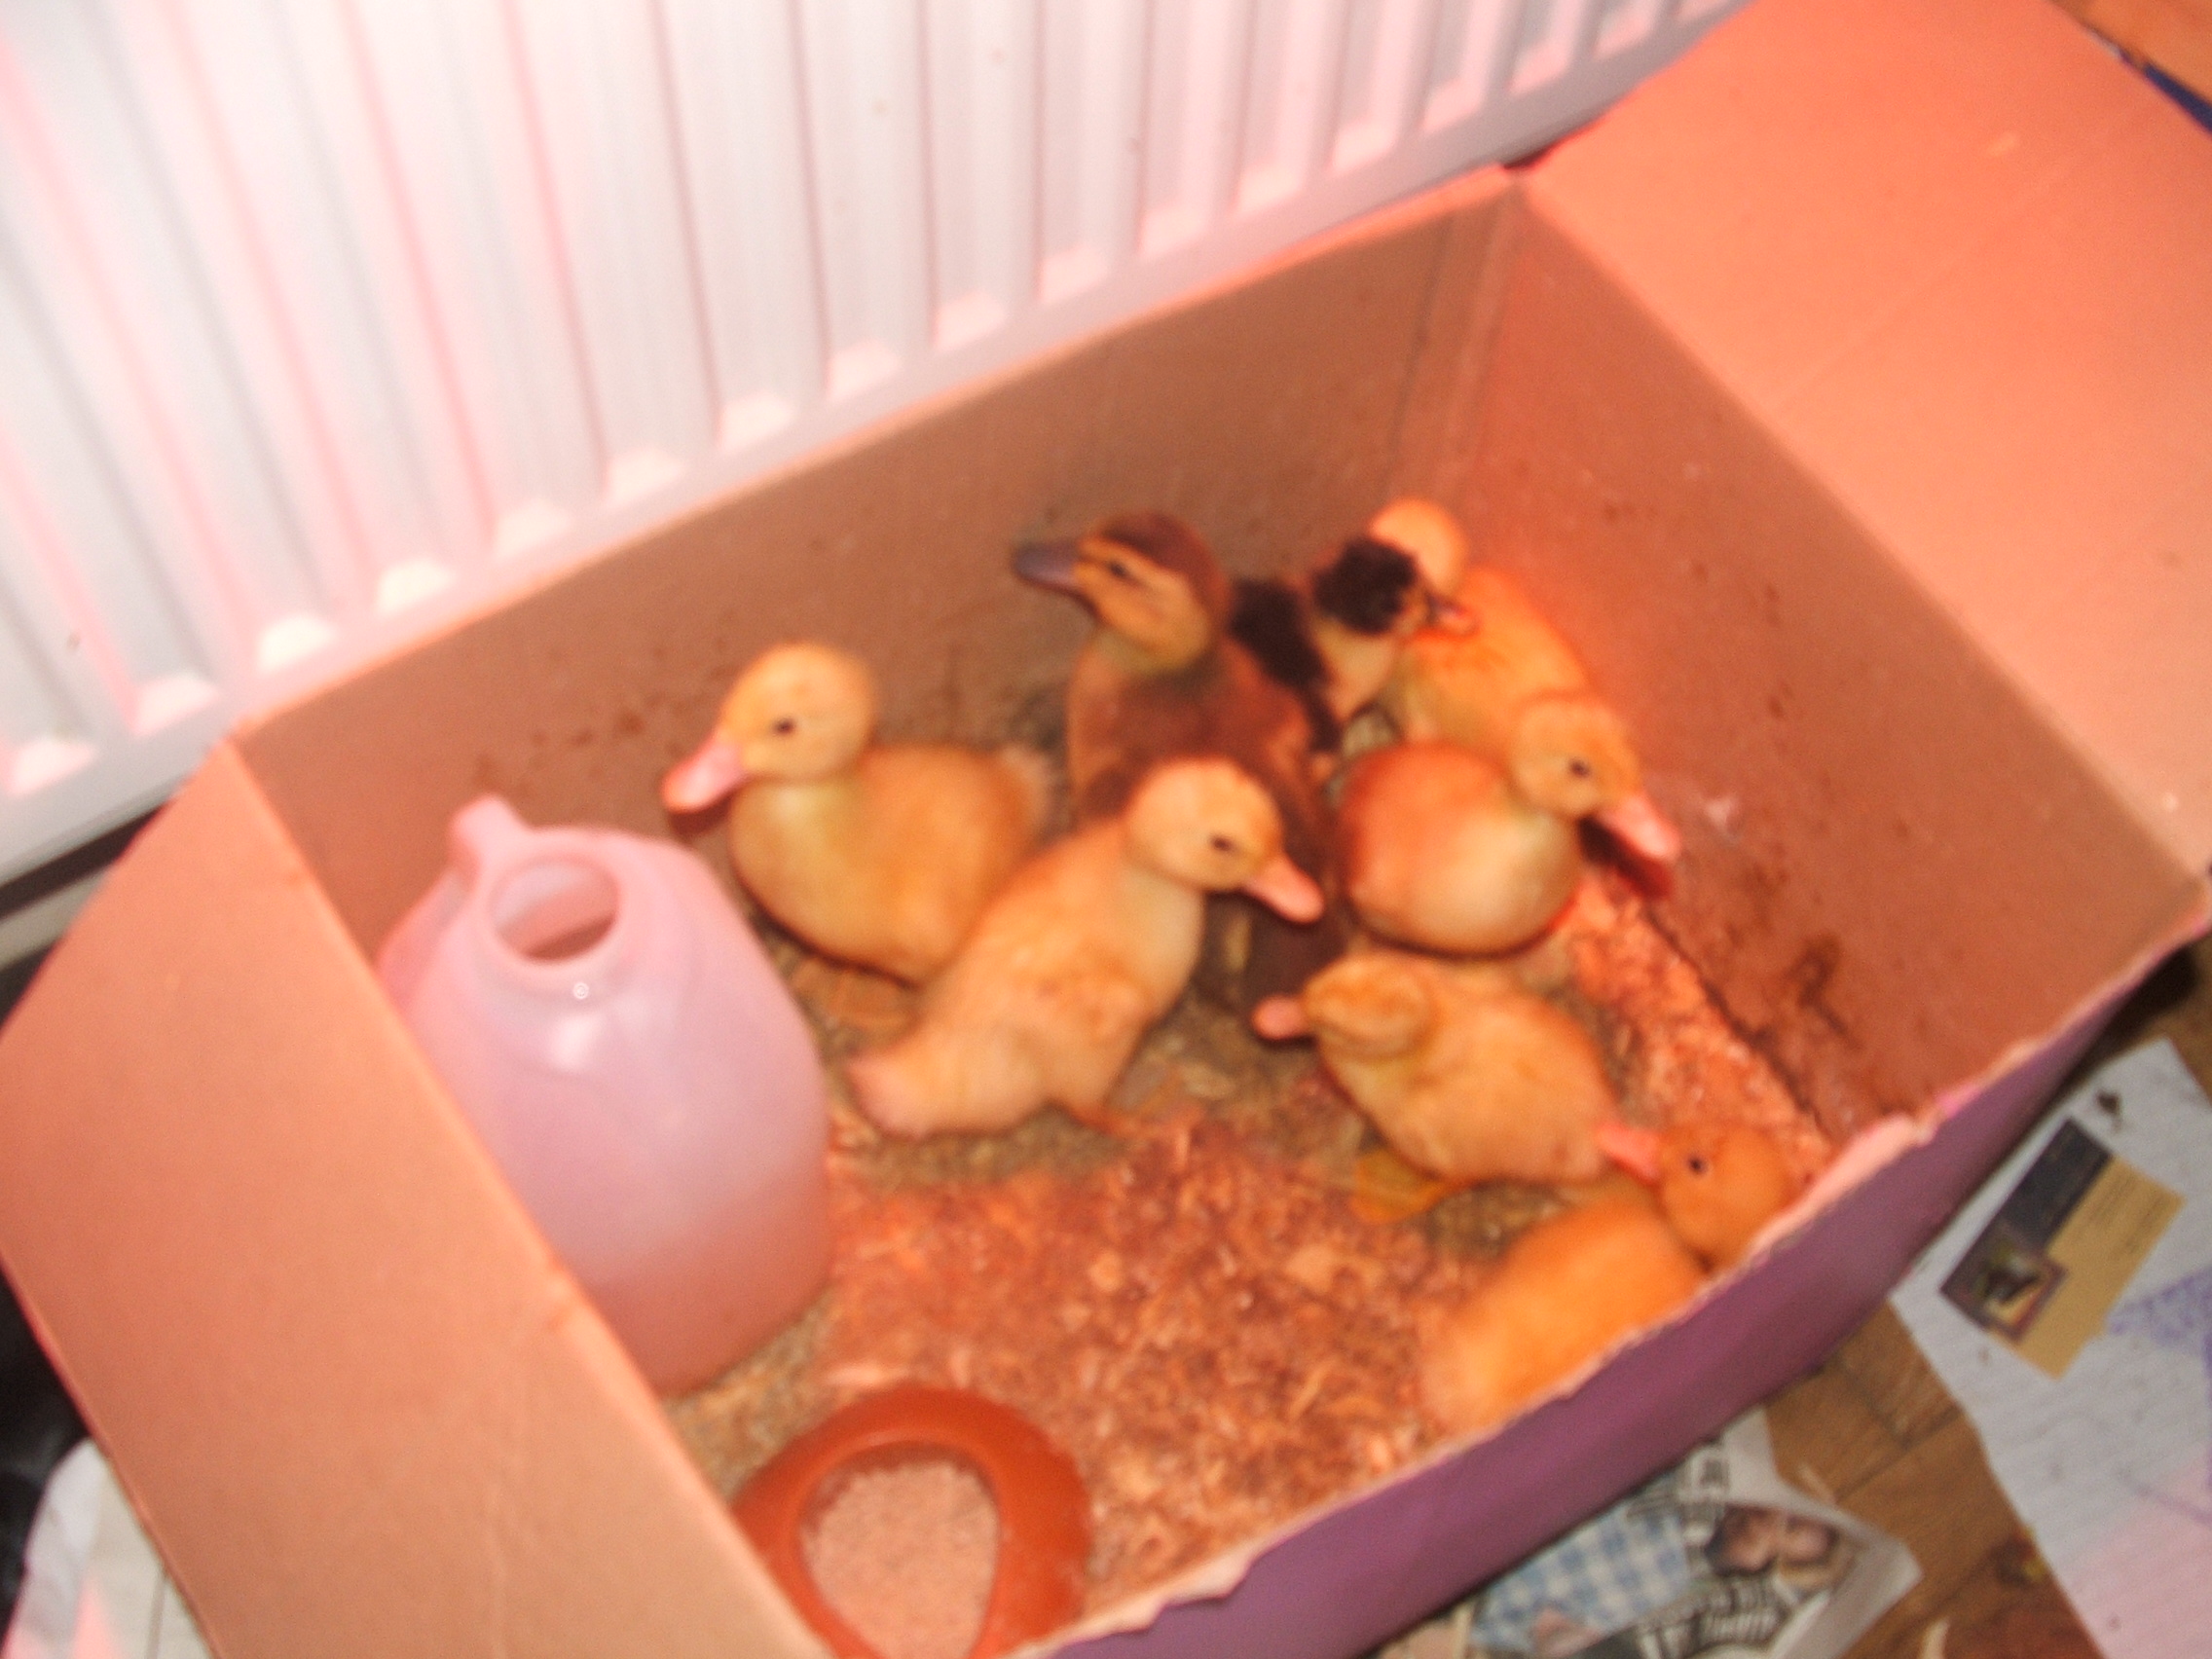 8 baby duckies!!